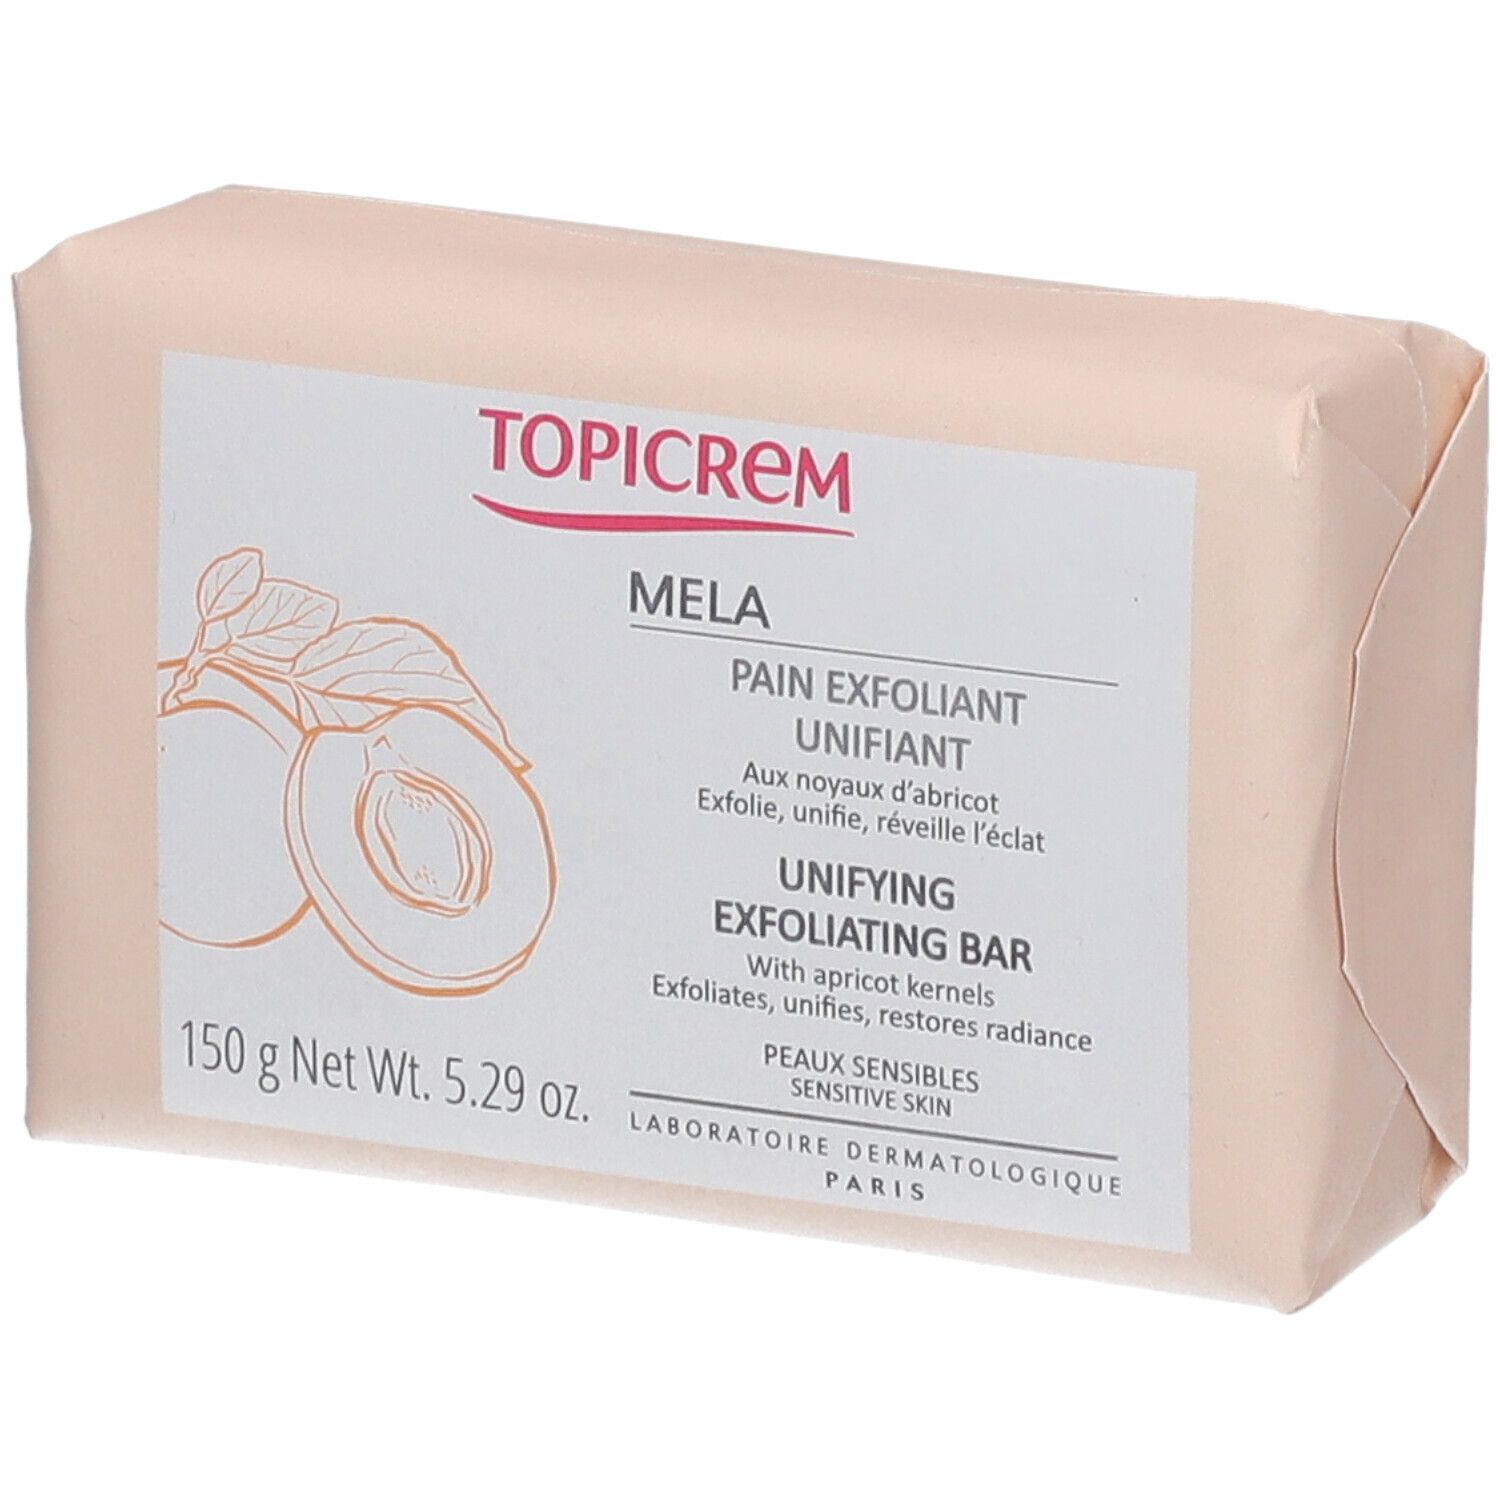 Topicrem® Mela Pain Exfoliant Unifiant